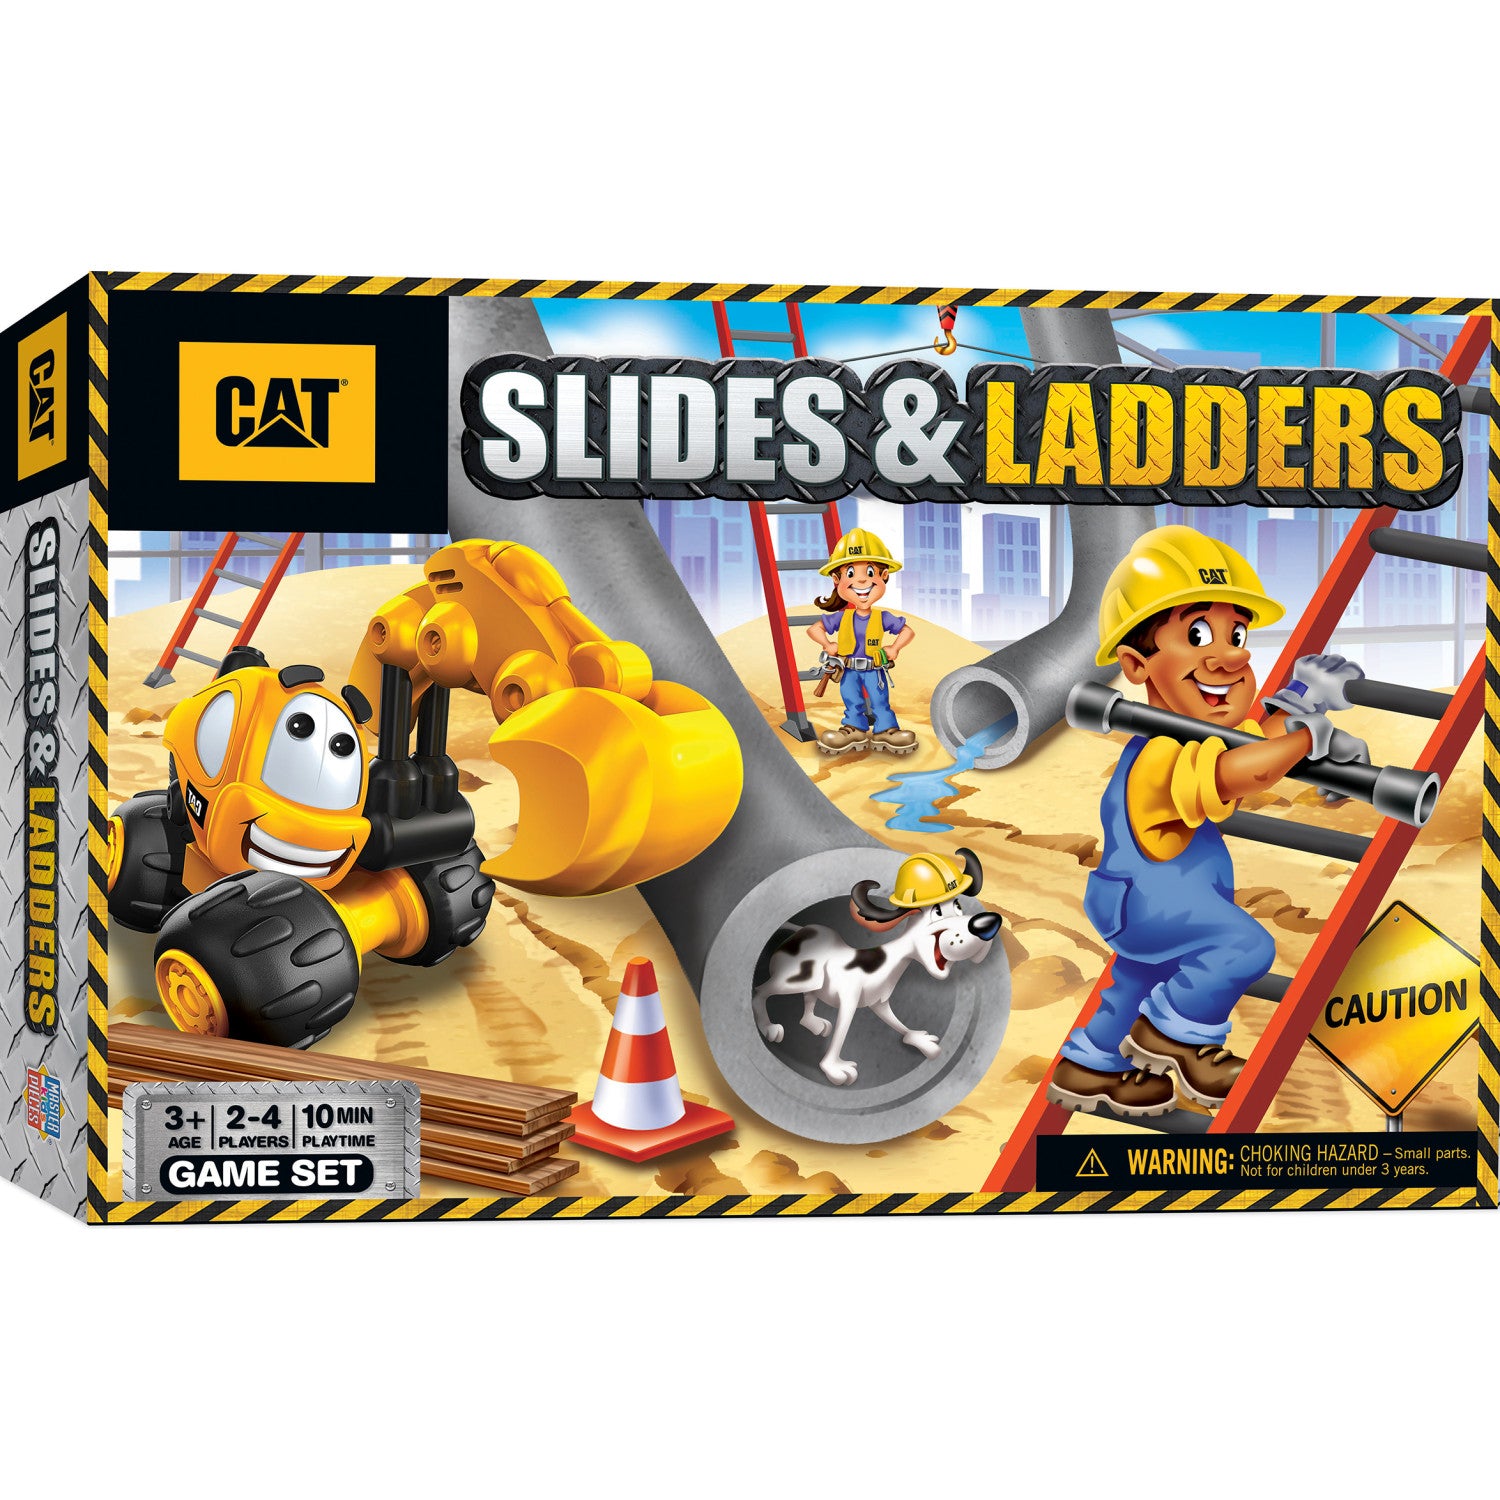 CAT - Slides & Ladders Board Game